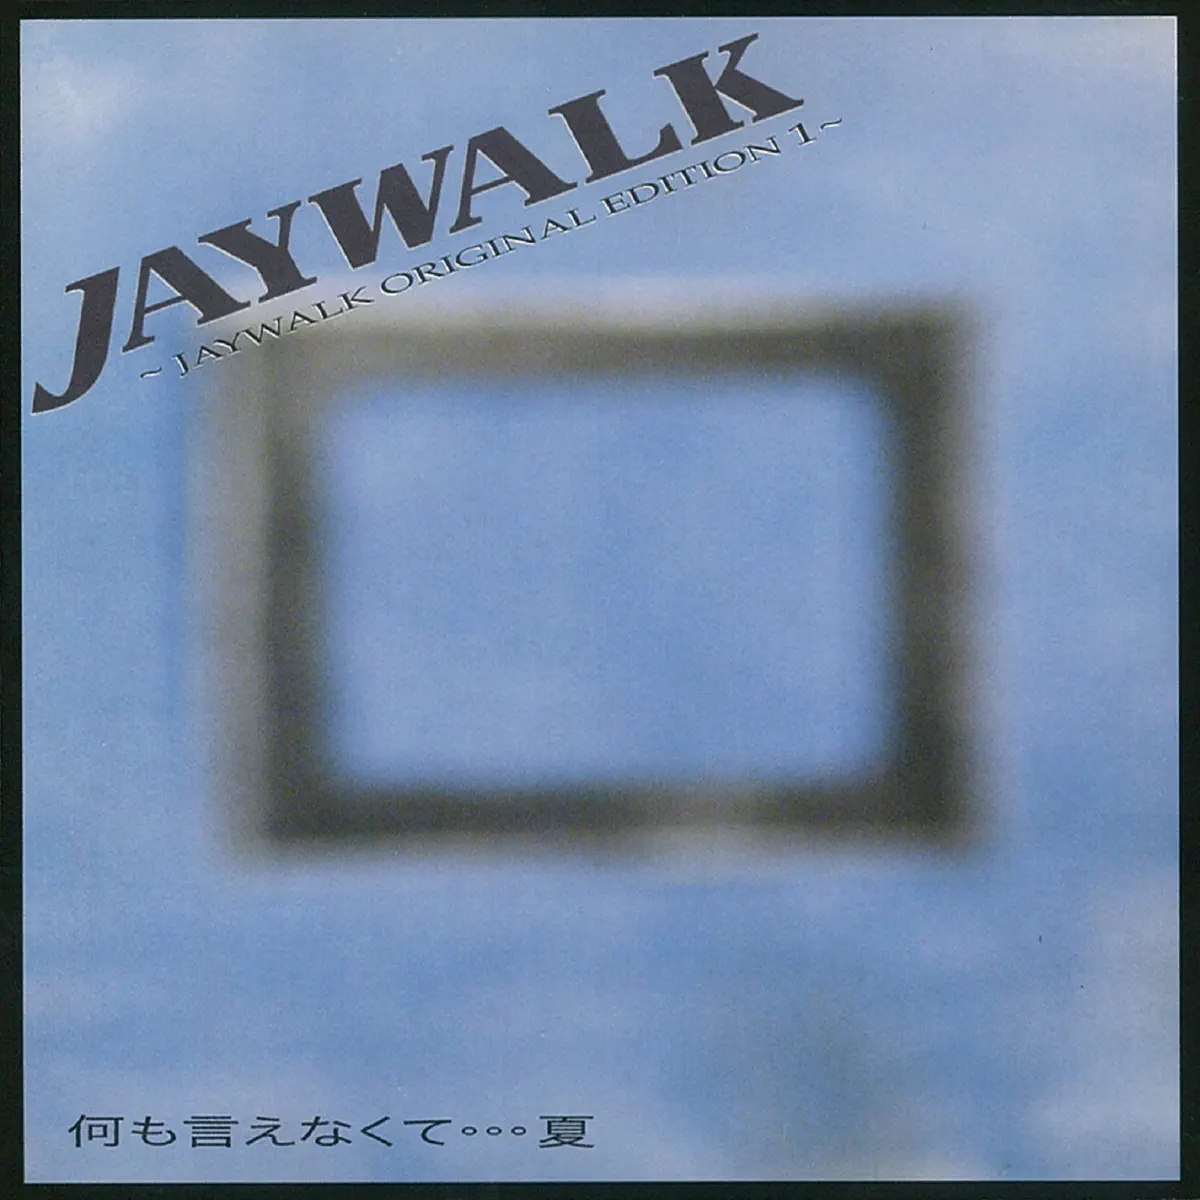 JAYWALK - 何も言えなくて…夏 JAYWALK ORIGINAL EDITION 1 (2006) [iTunes Plus AAC M4A]-新房子